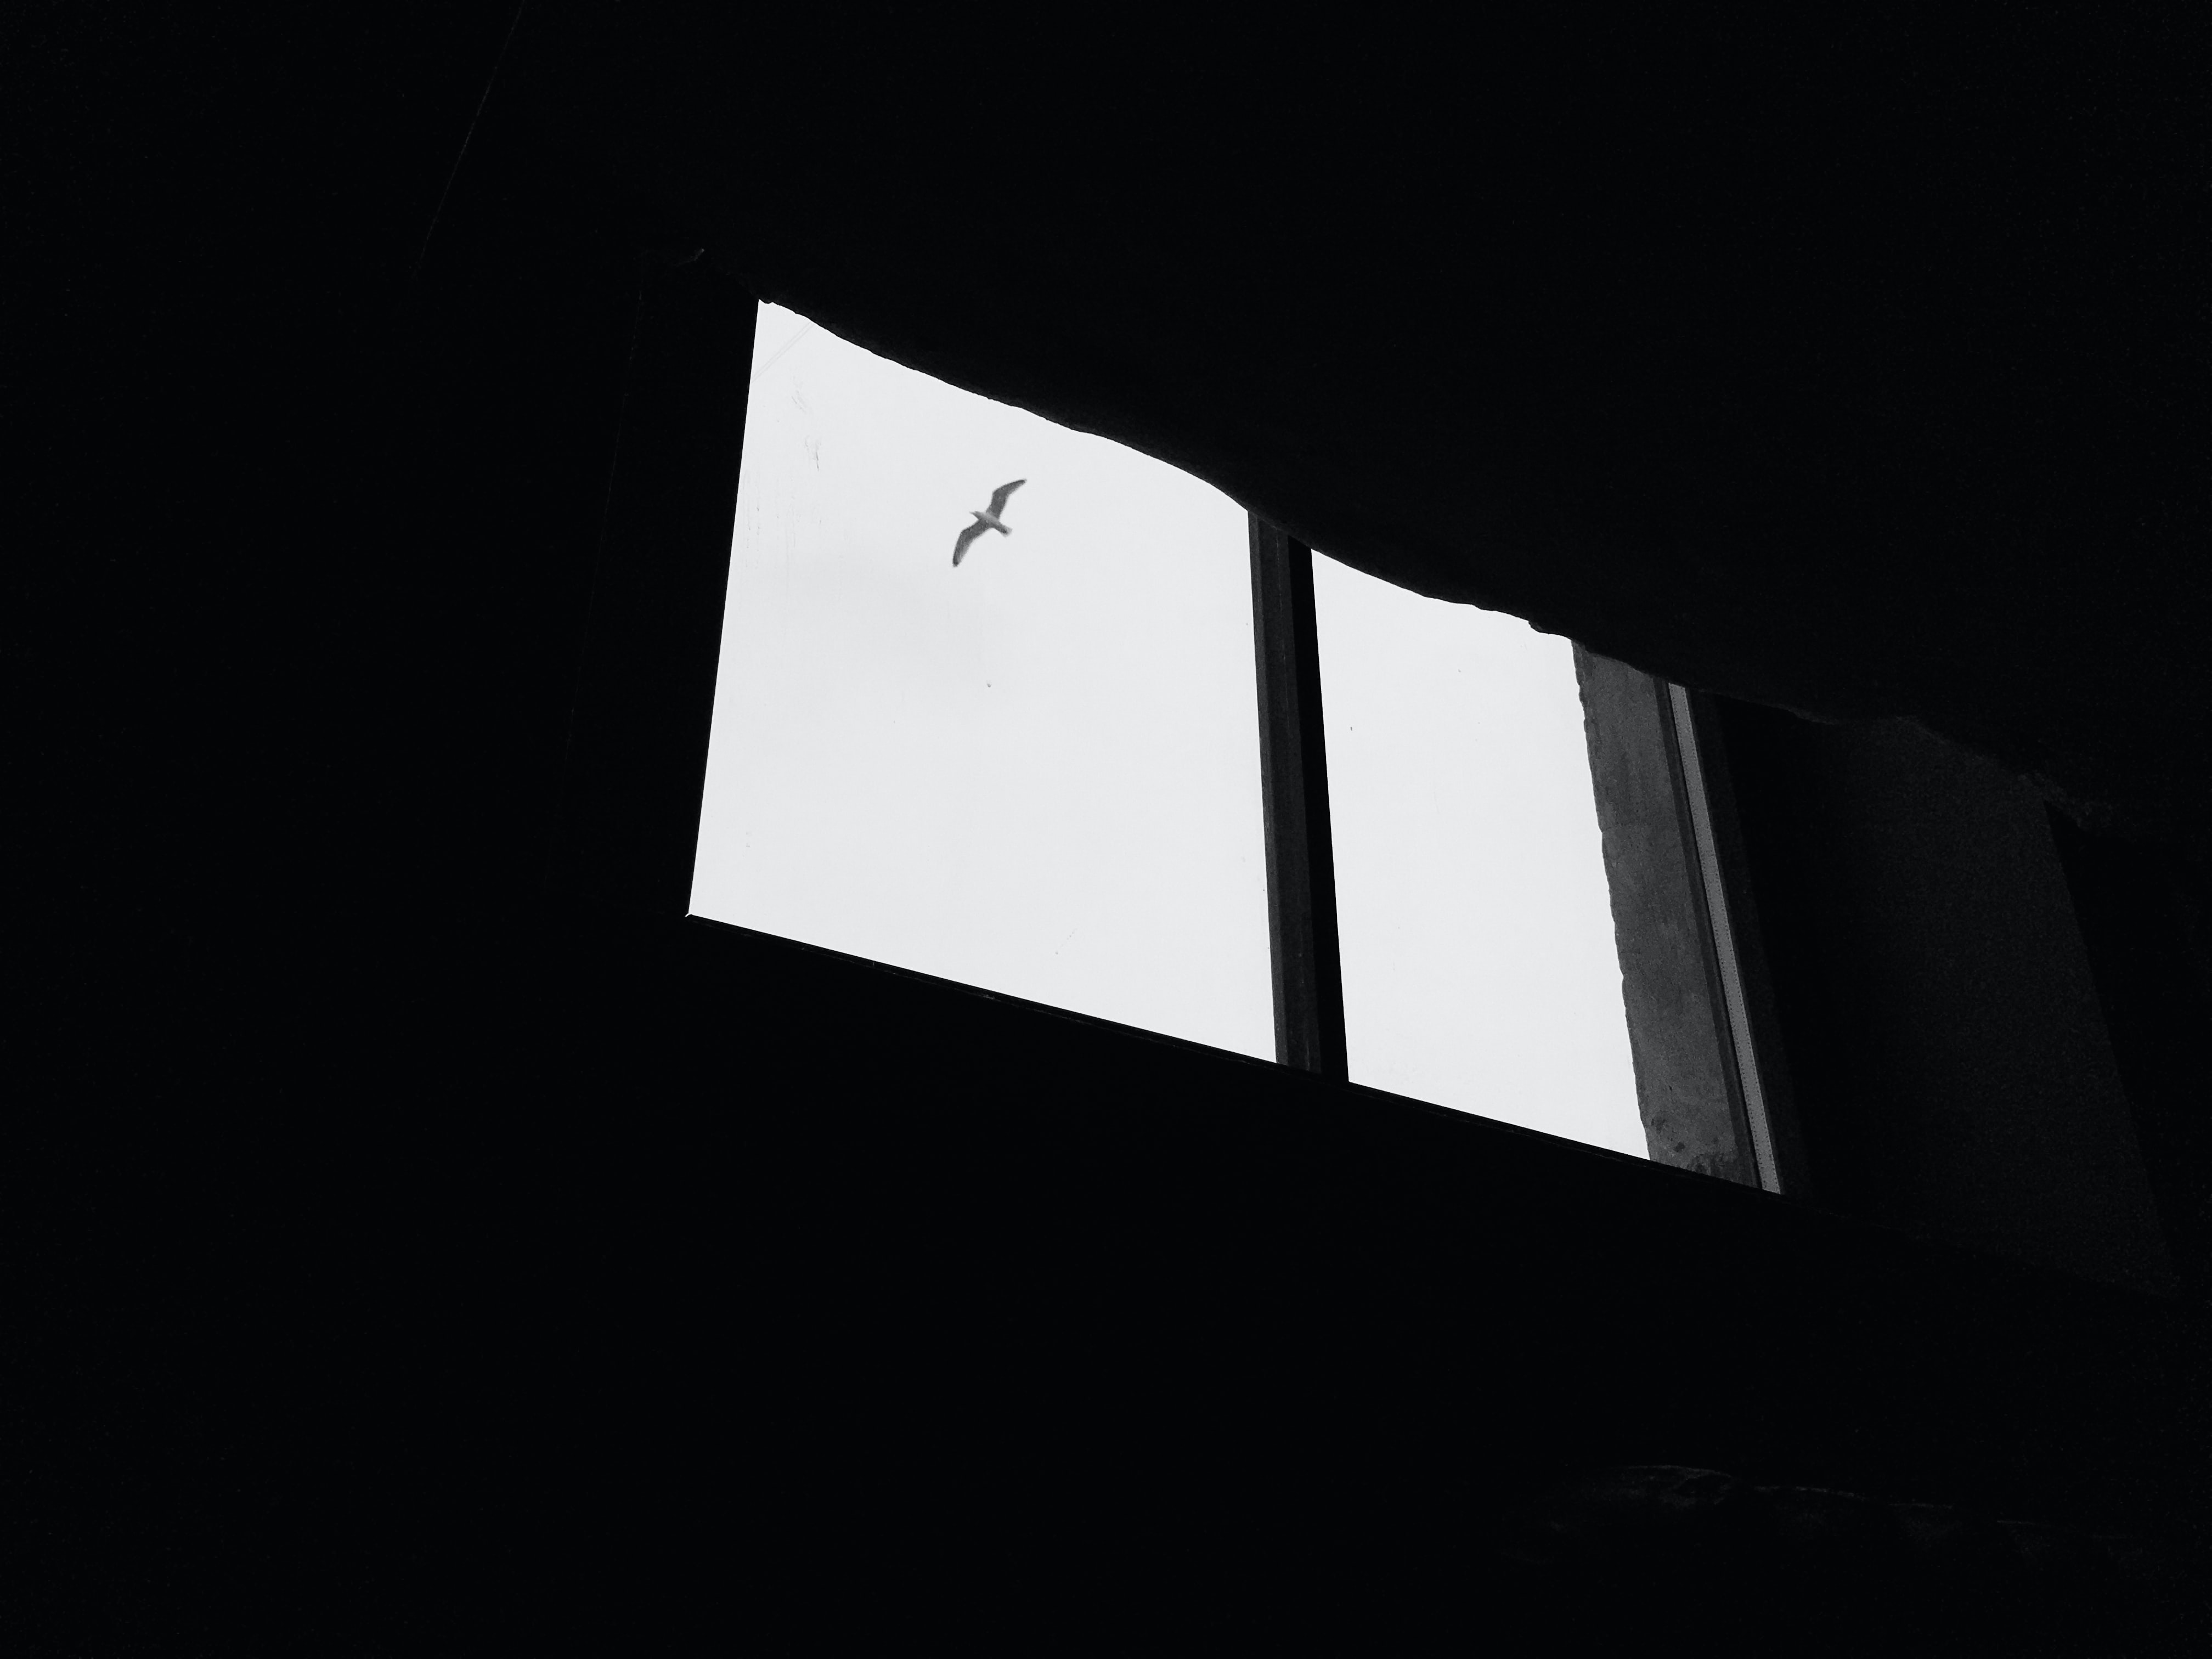 android seagull, sky, miscellanea, miscellaneous, bird, window, gull